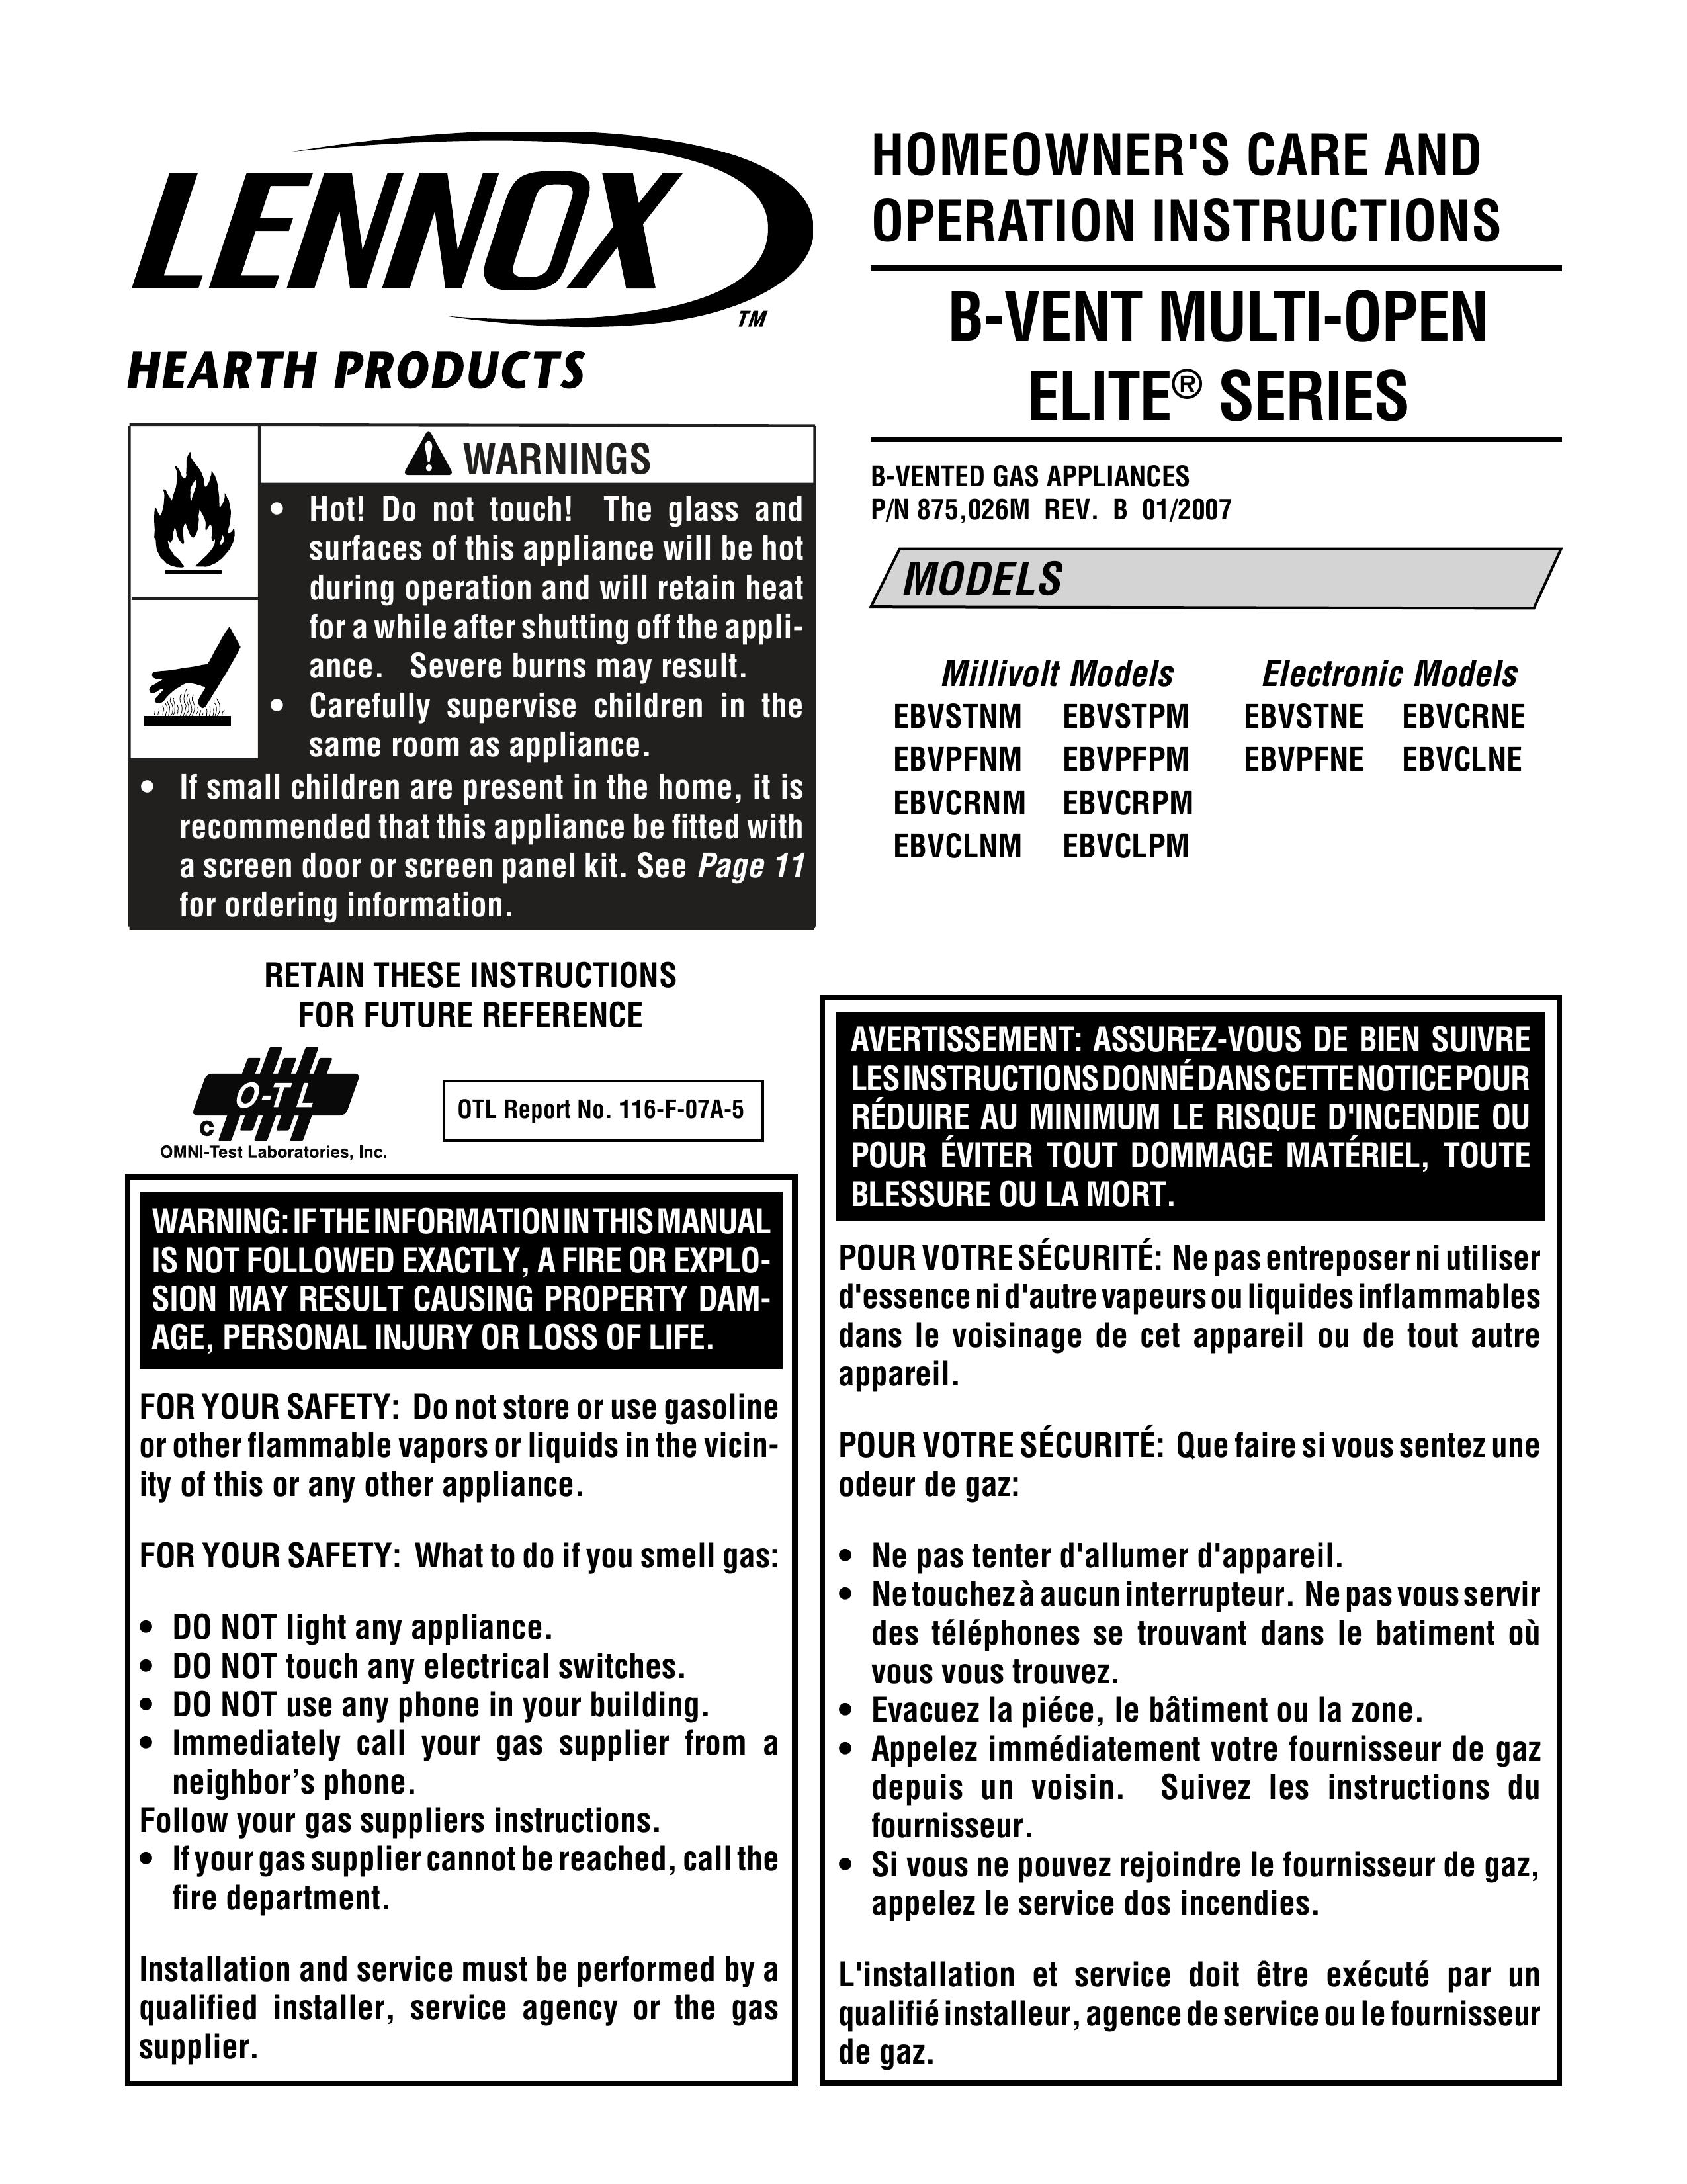 Lennox Hearth EBVPFNM Outdoor Fireplace User Manual